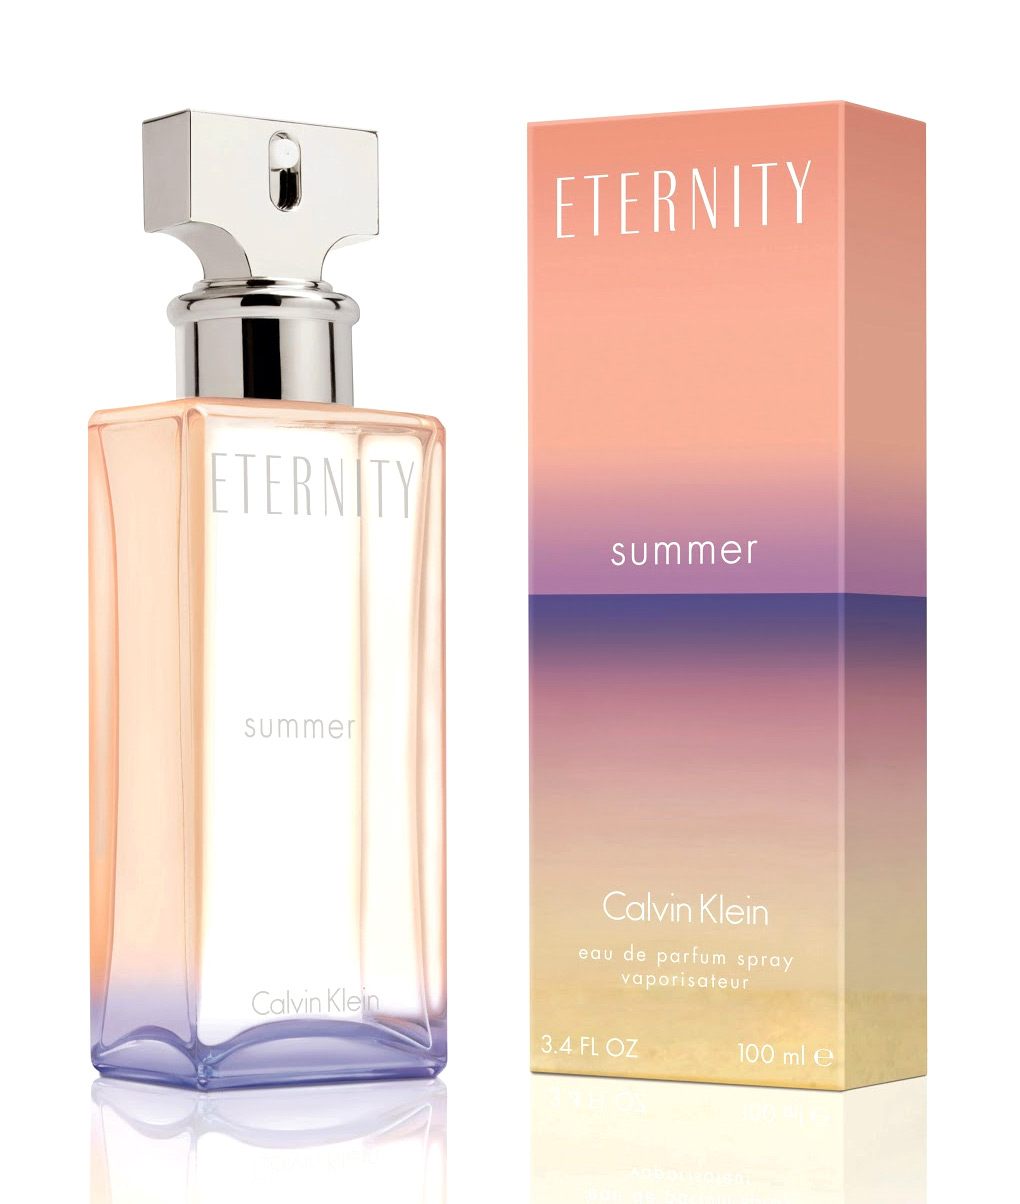 Eternity Summer 2015 Calvin Klein perfume - a fragrance for women 2015